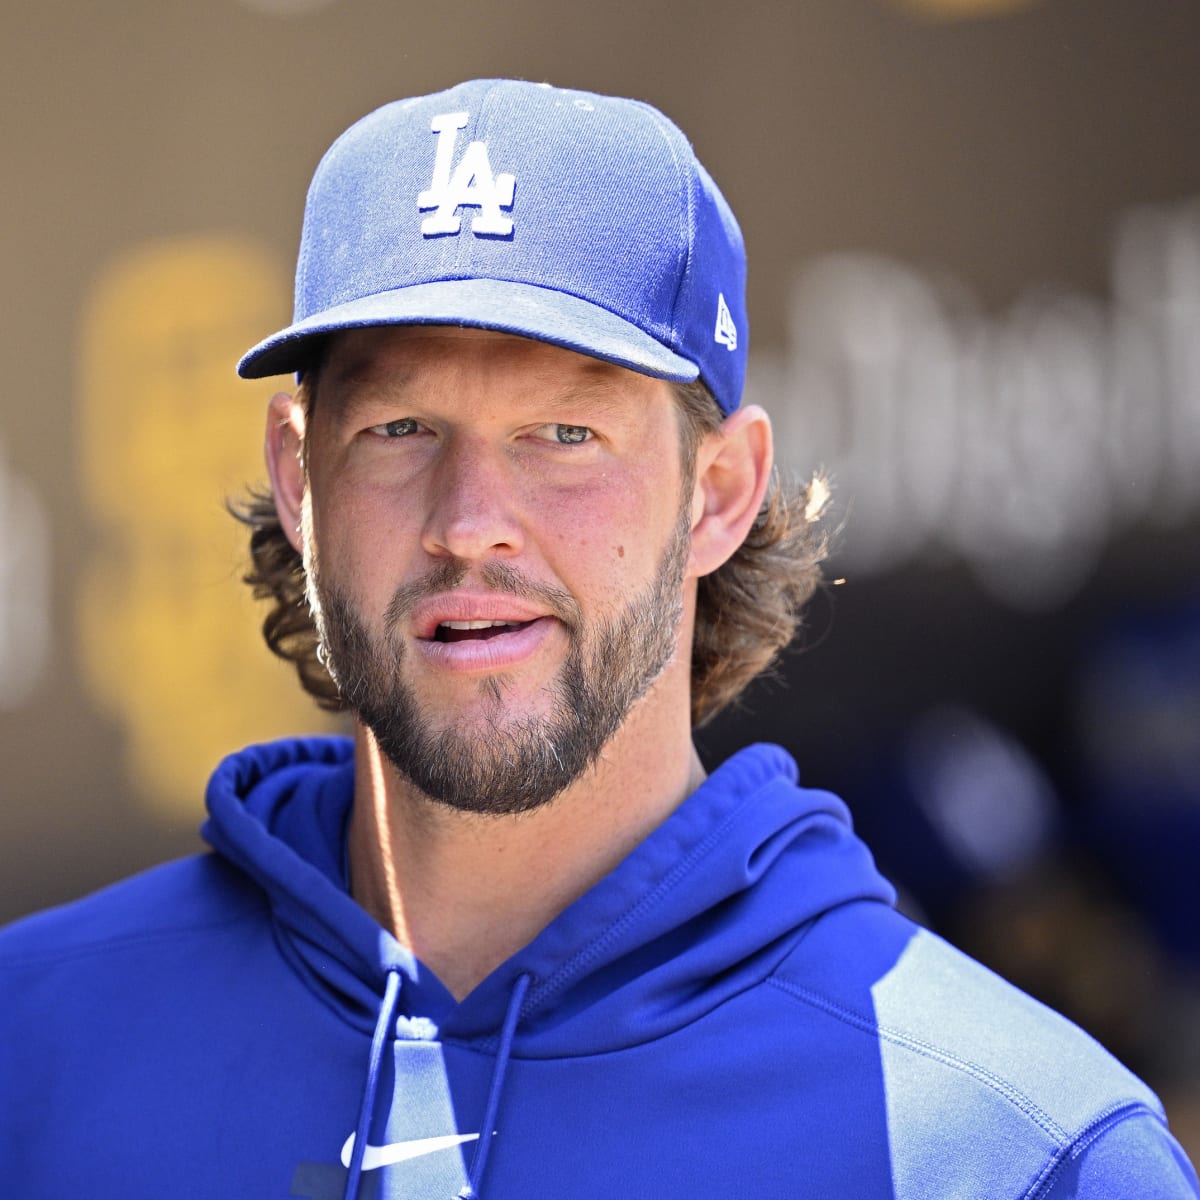 Dodgers Injury Update: LA Pencils in Return Date for Clayton